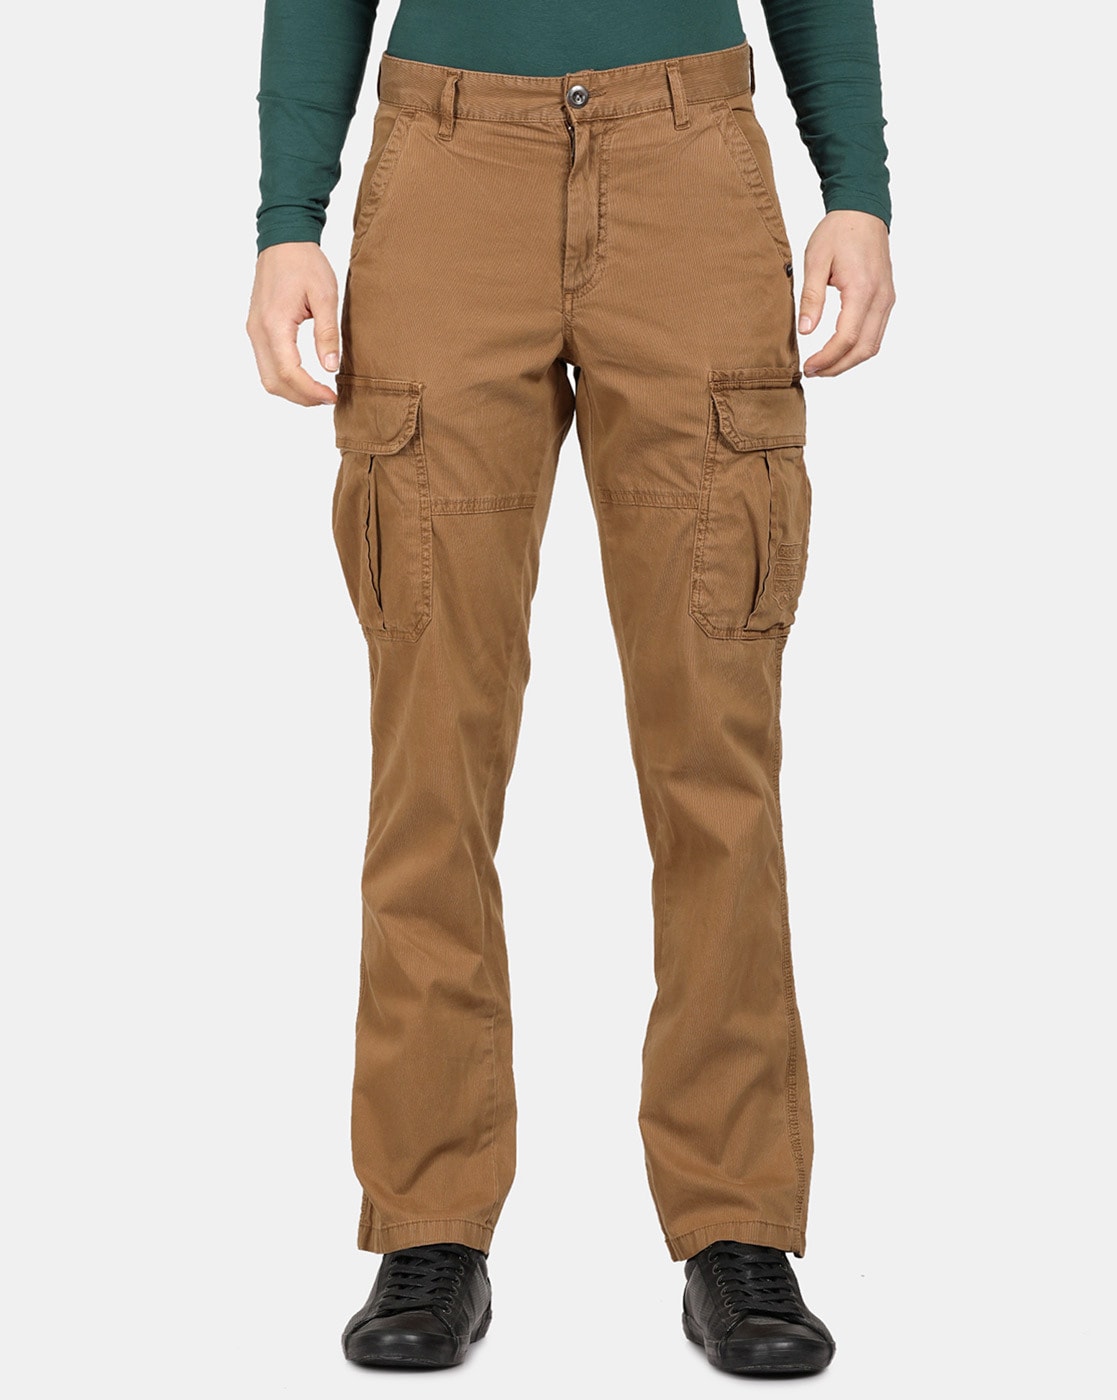 Buy Beige Trousers & Pants for Men by Ketch Online | Ajio.com